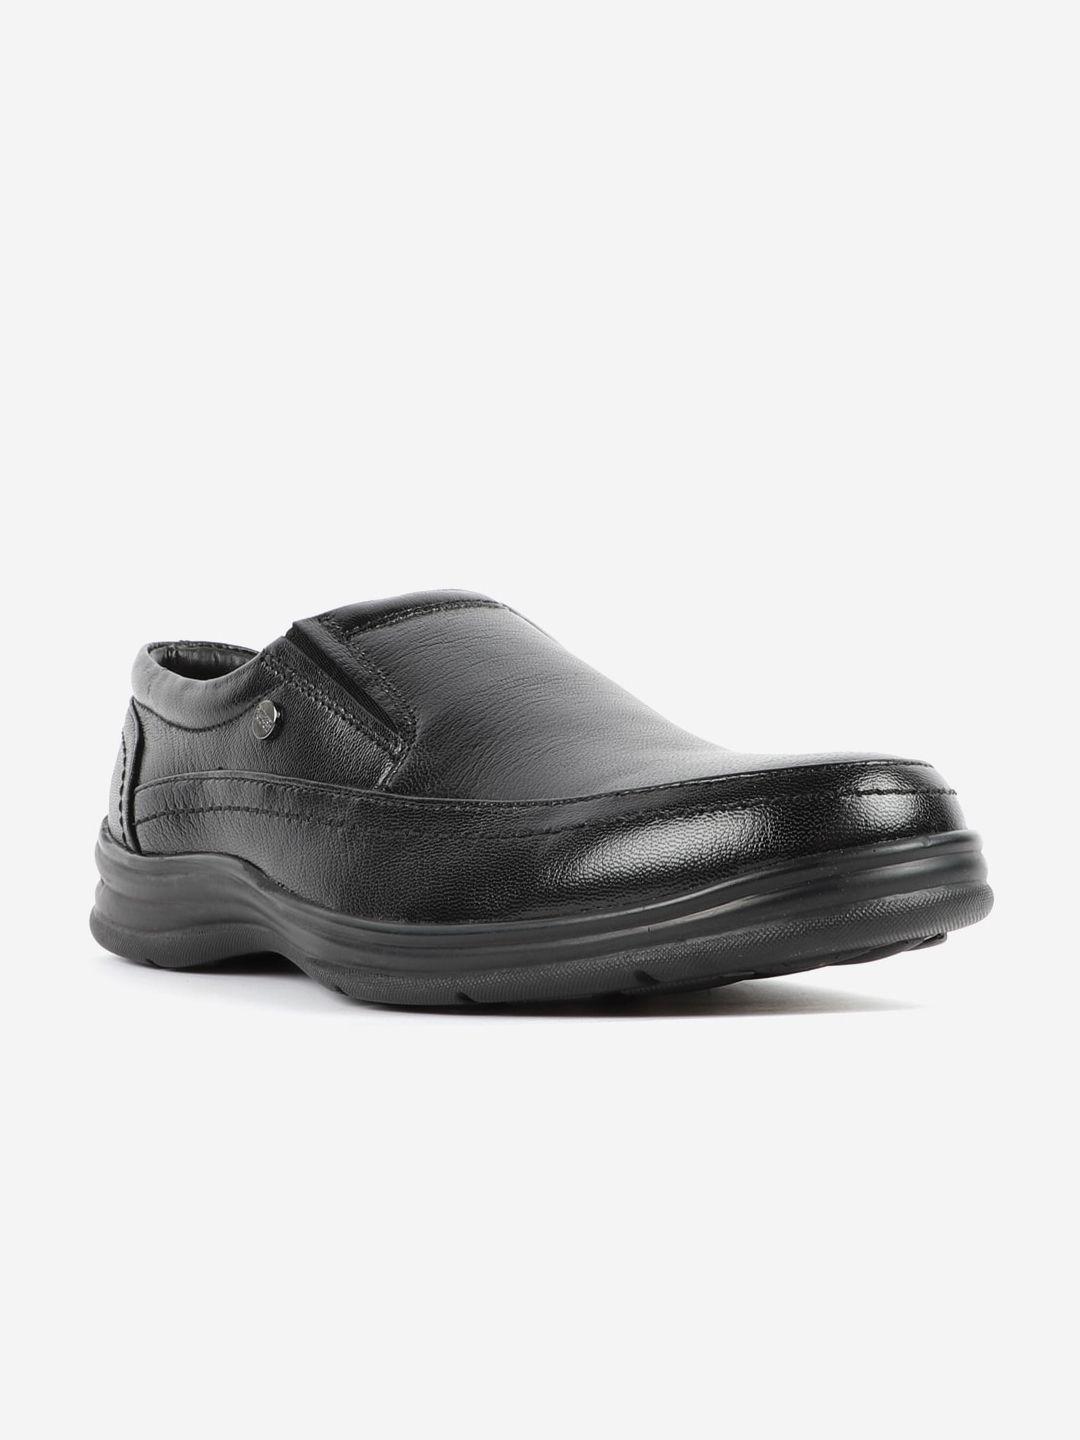 carlton london men black leather slip-on sneakers